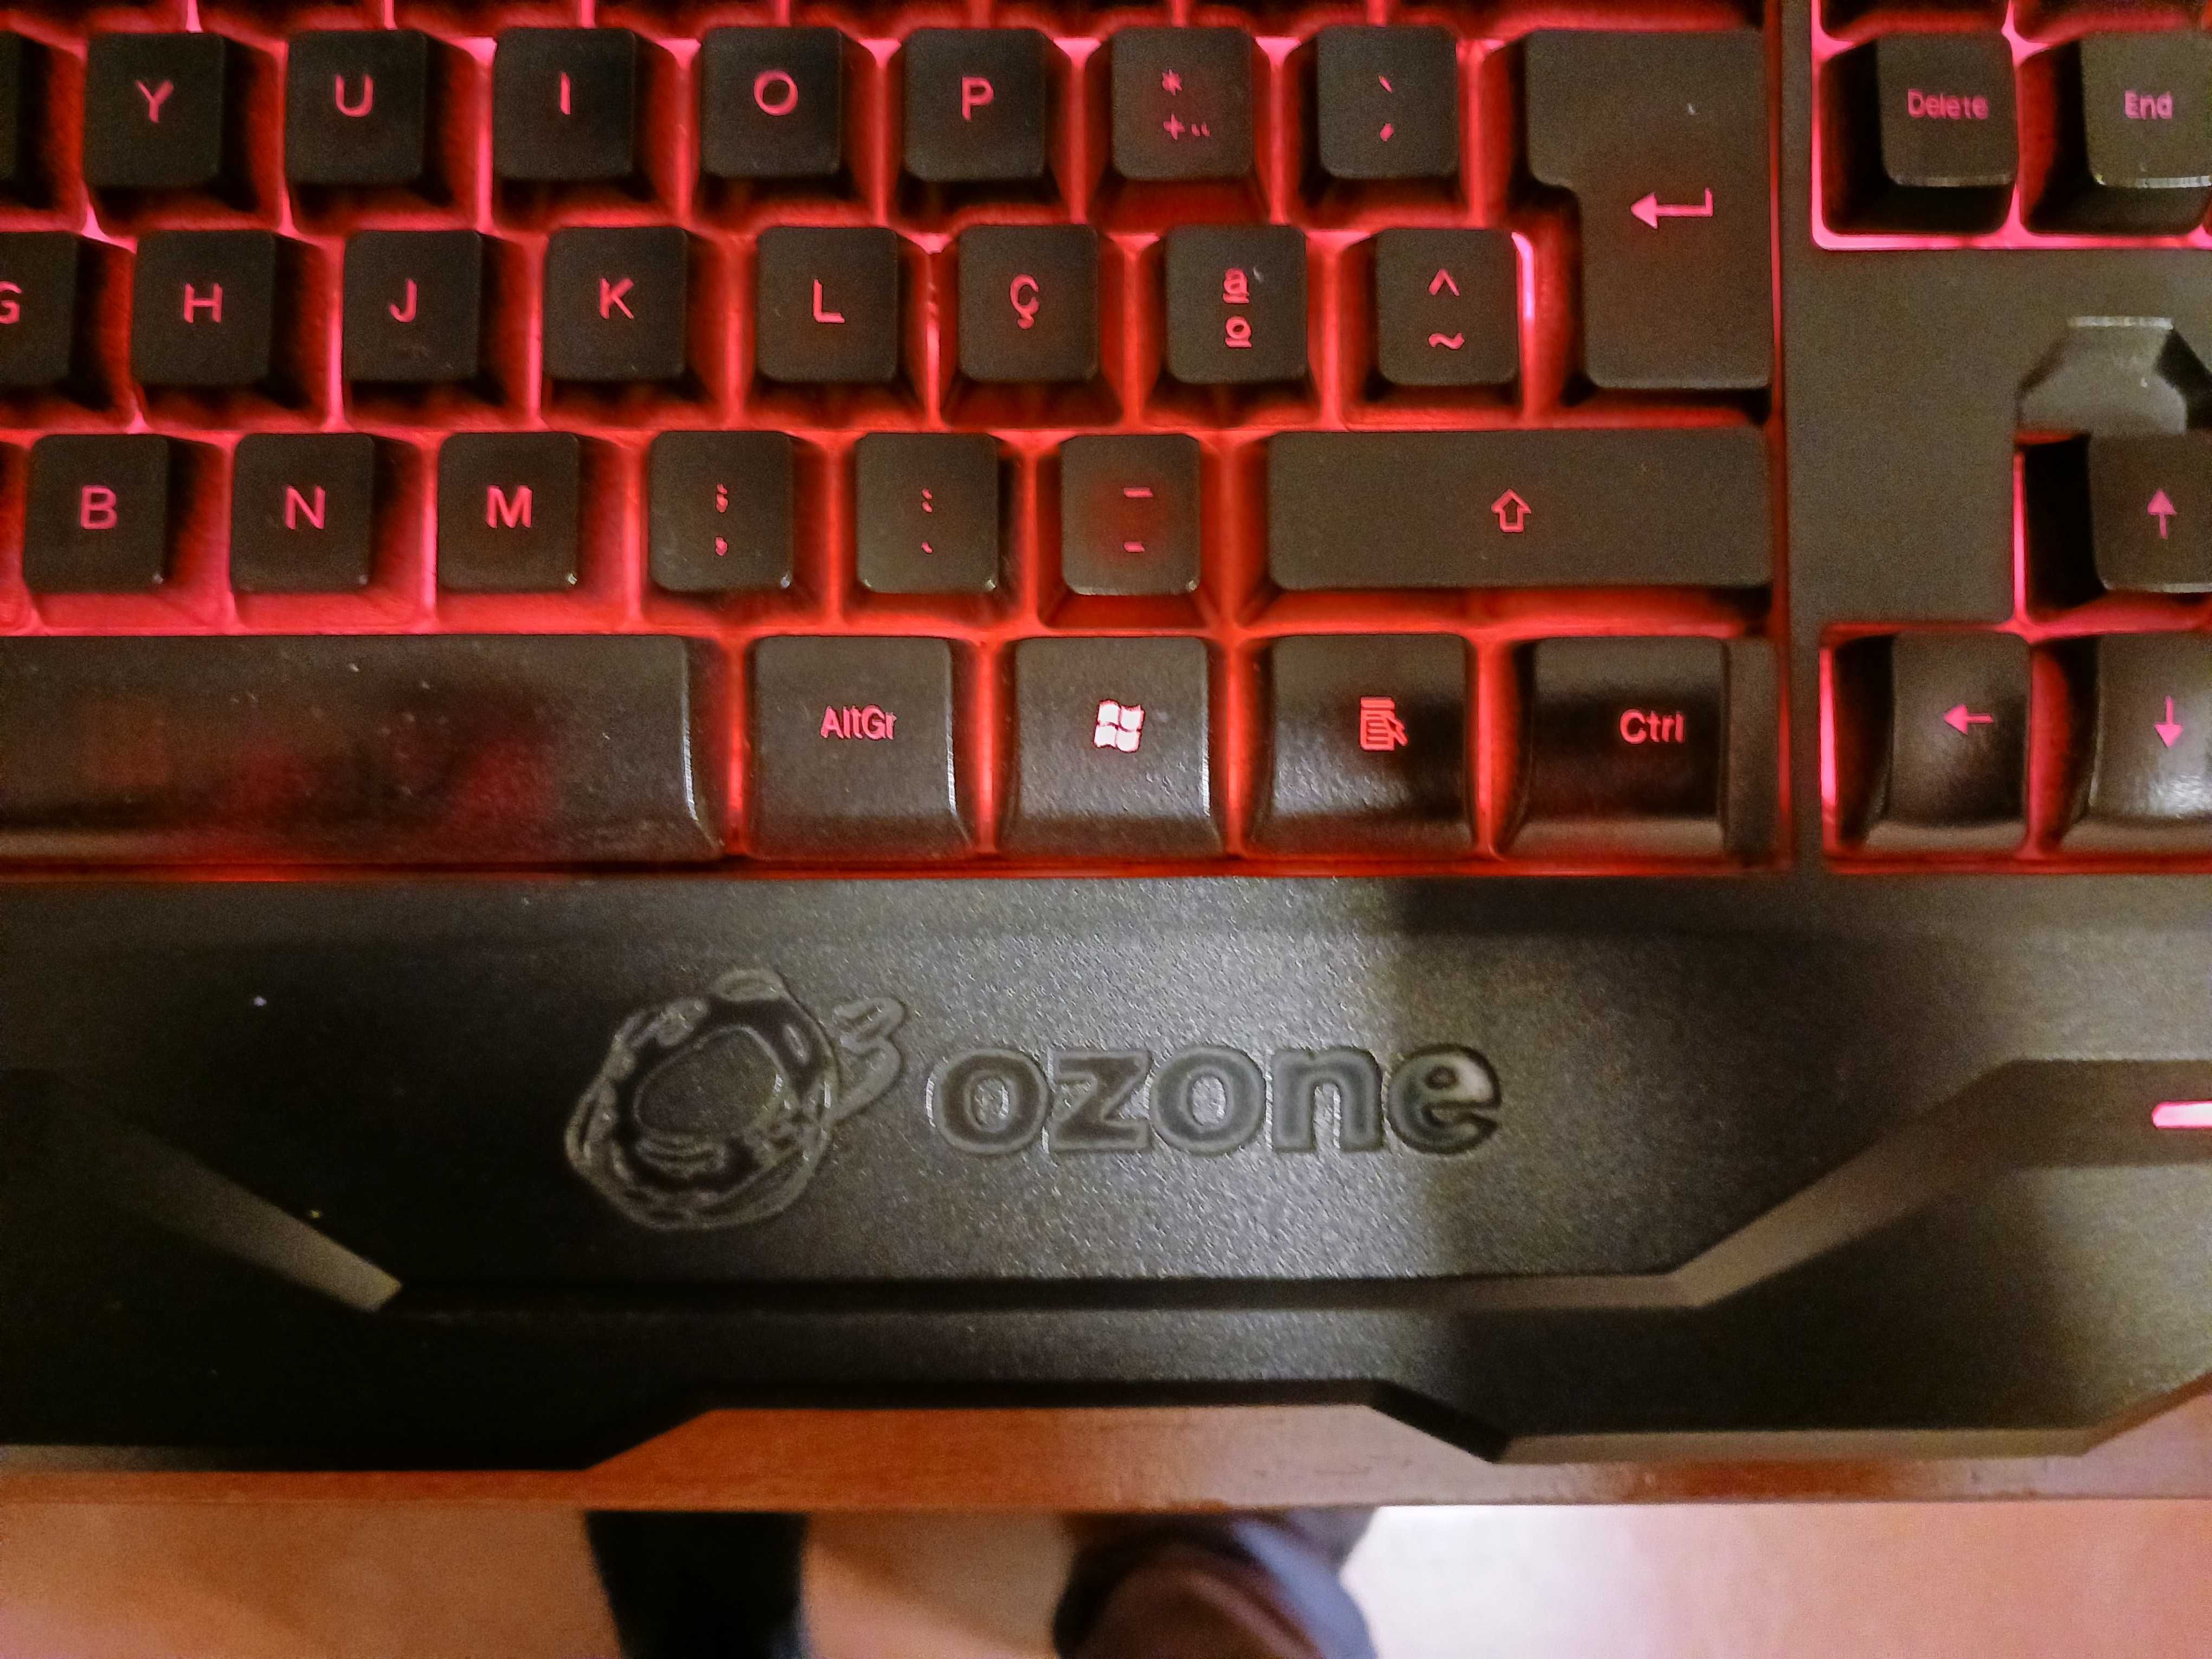 Teclado OZONE
Membrane Keyboard BLADE